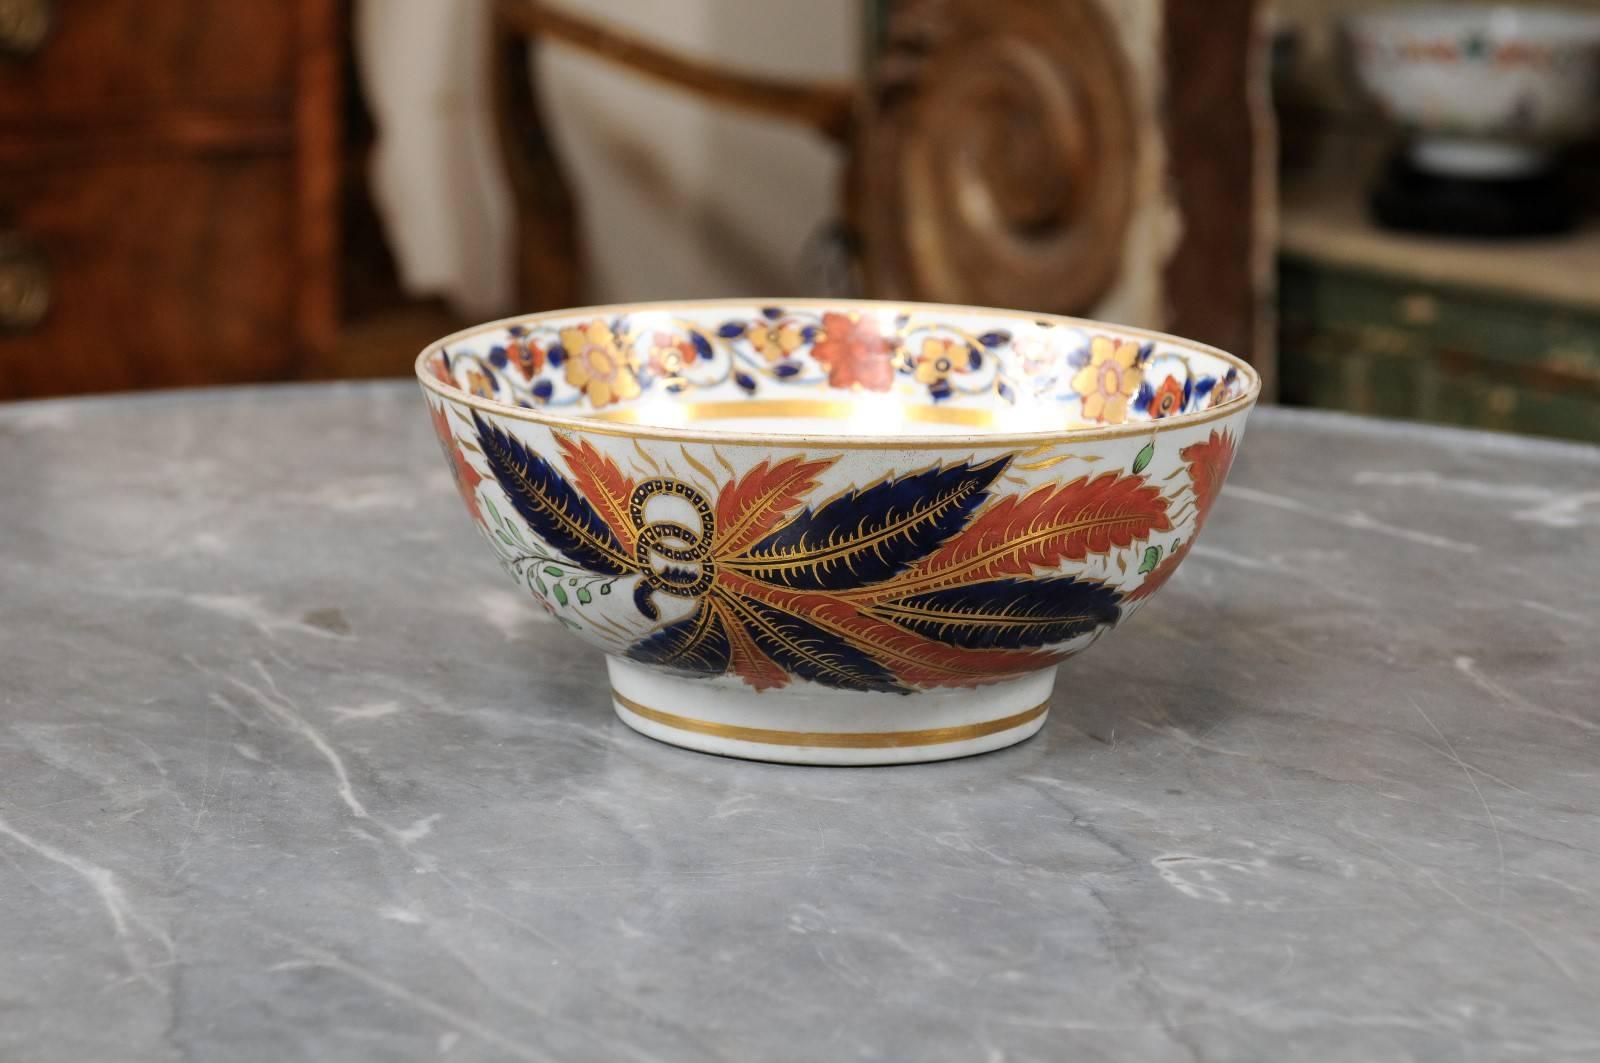 Porcelain Spode “Tabacco Leaf” Punch Bowl after Chinese Export Design, England, ca. 1820 For Sale